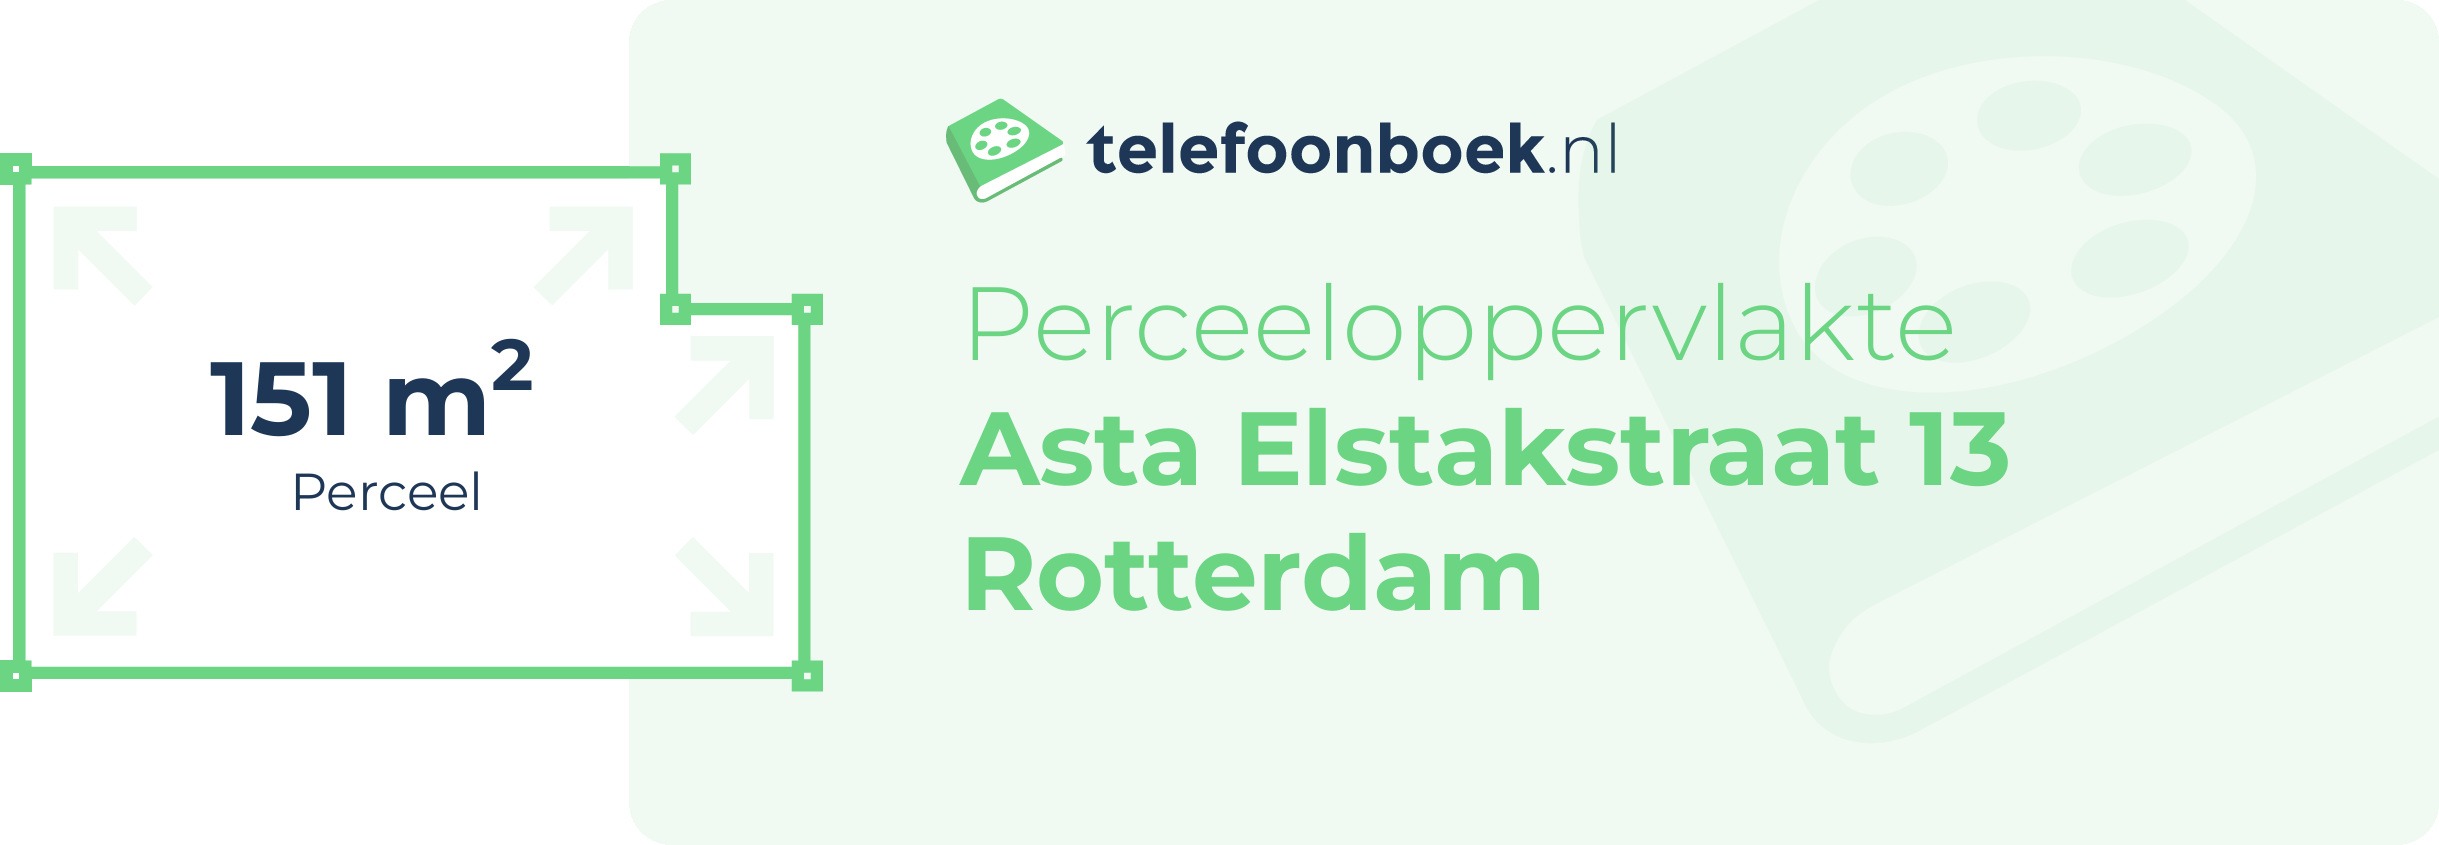 Perceeloppervlakte Asta Elstakstraat 13 Rotterdam